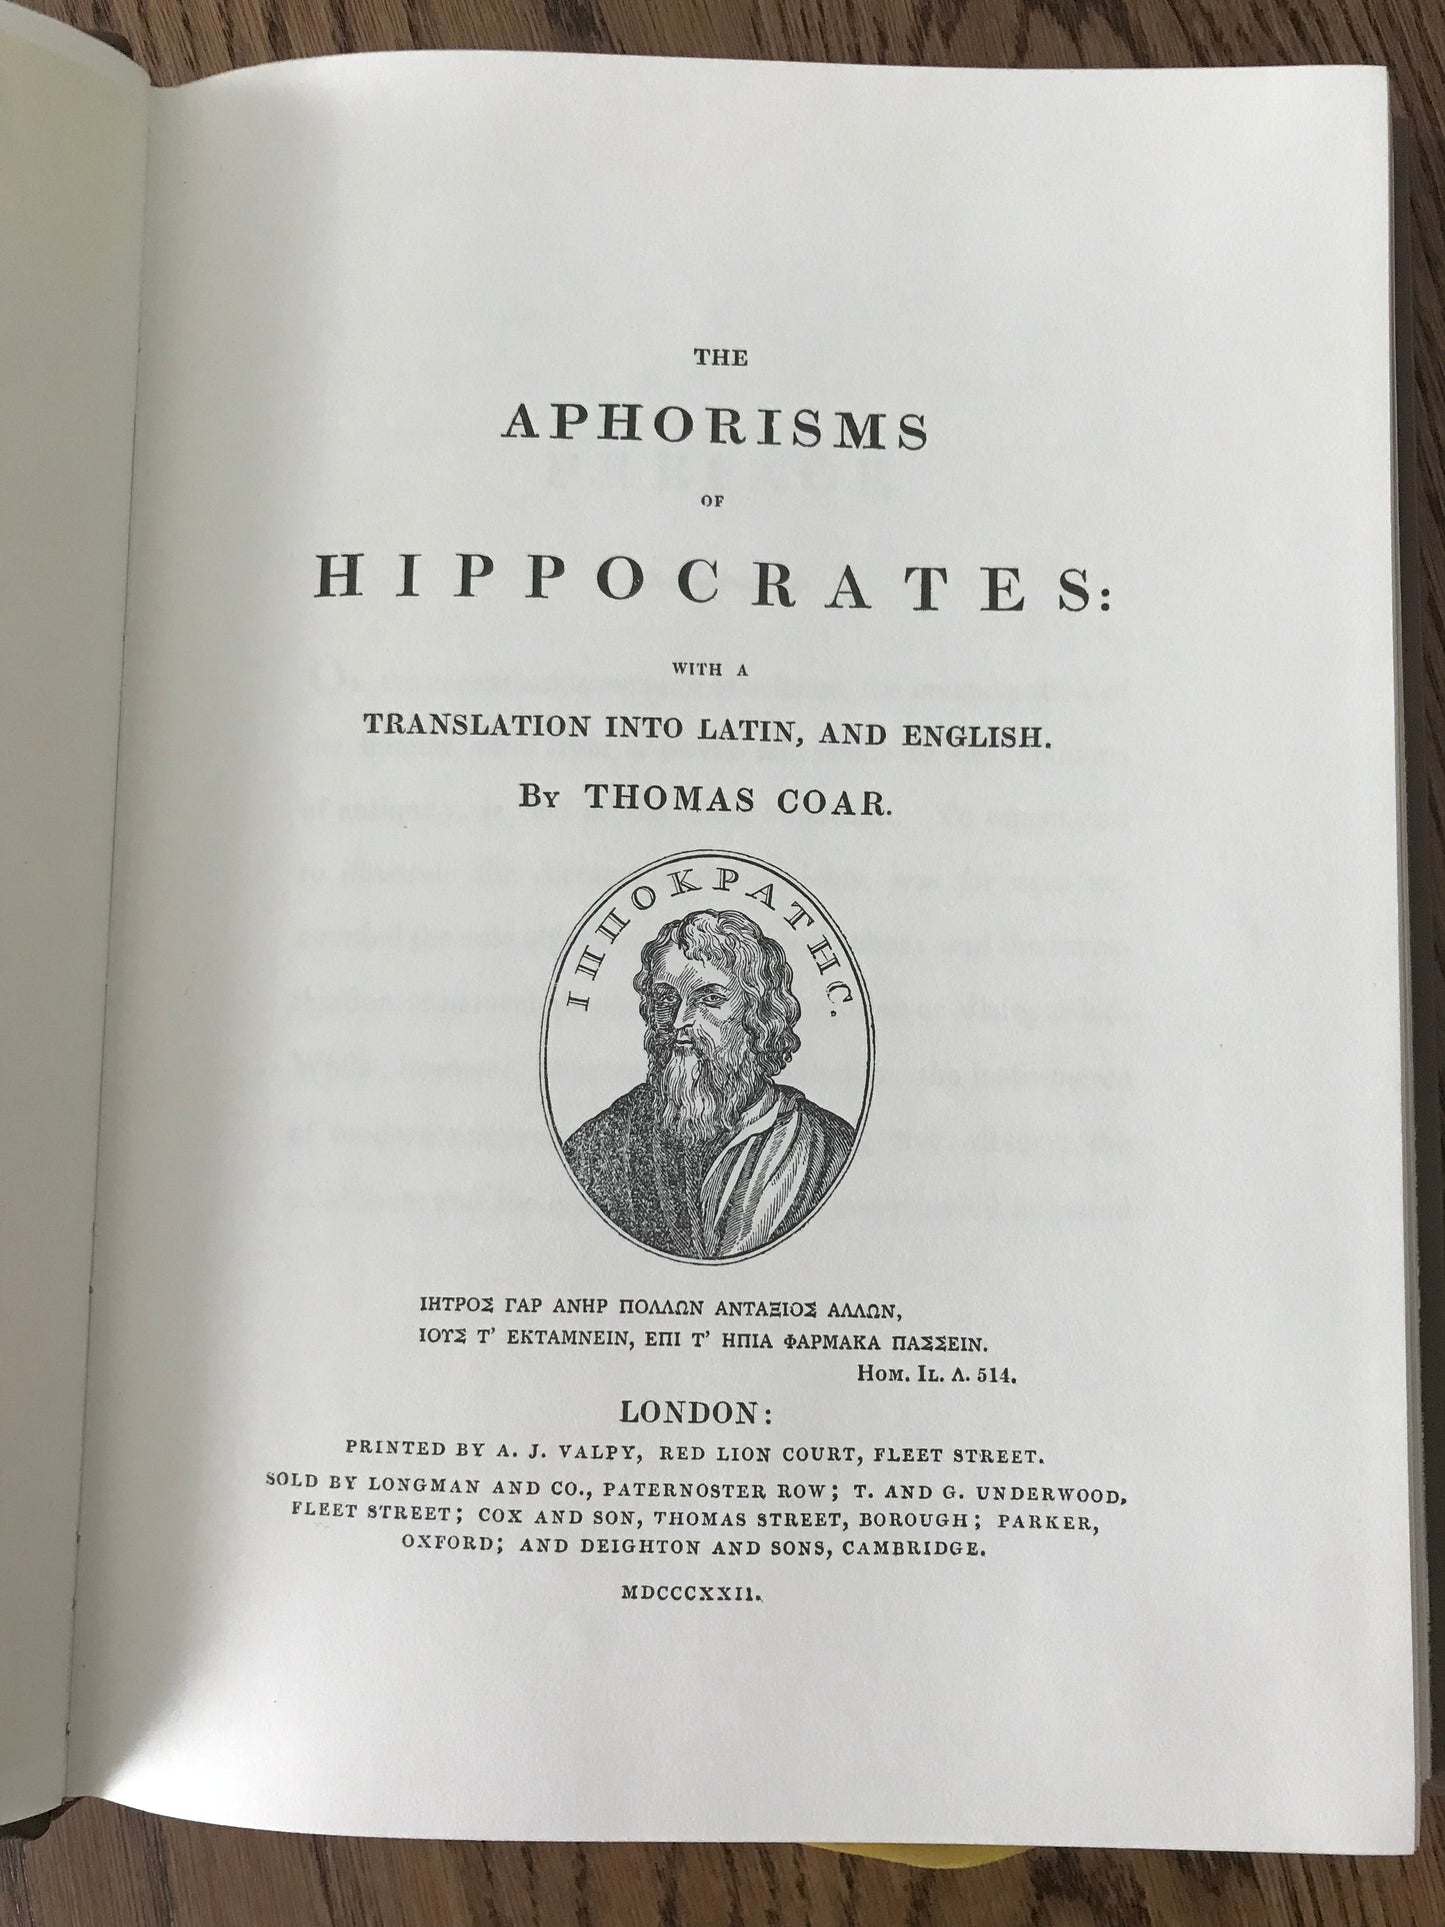 THE APHORISMS OF HIPPOCRATES  (MEDICINE) BooksCardsNBikes